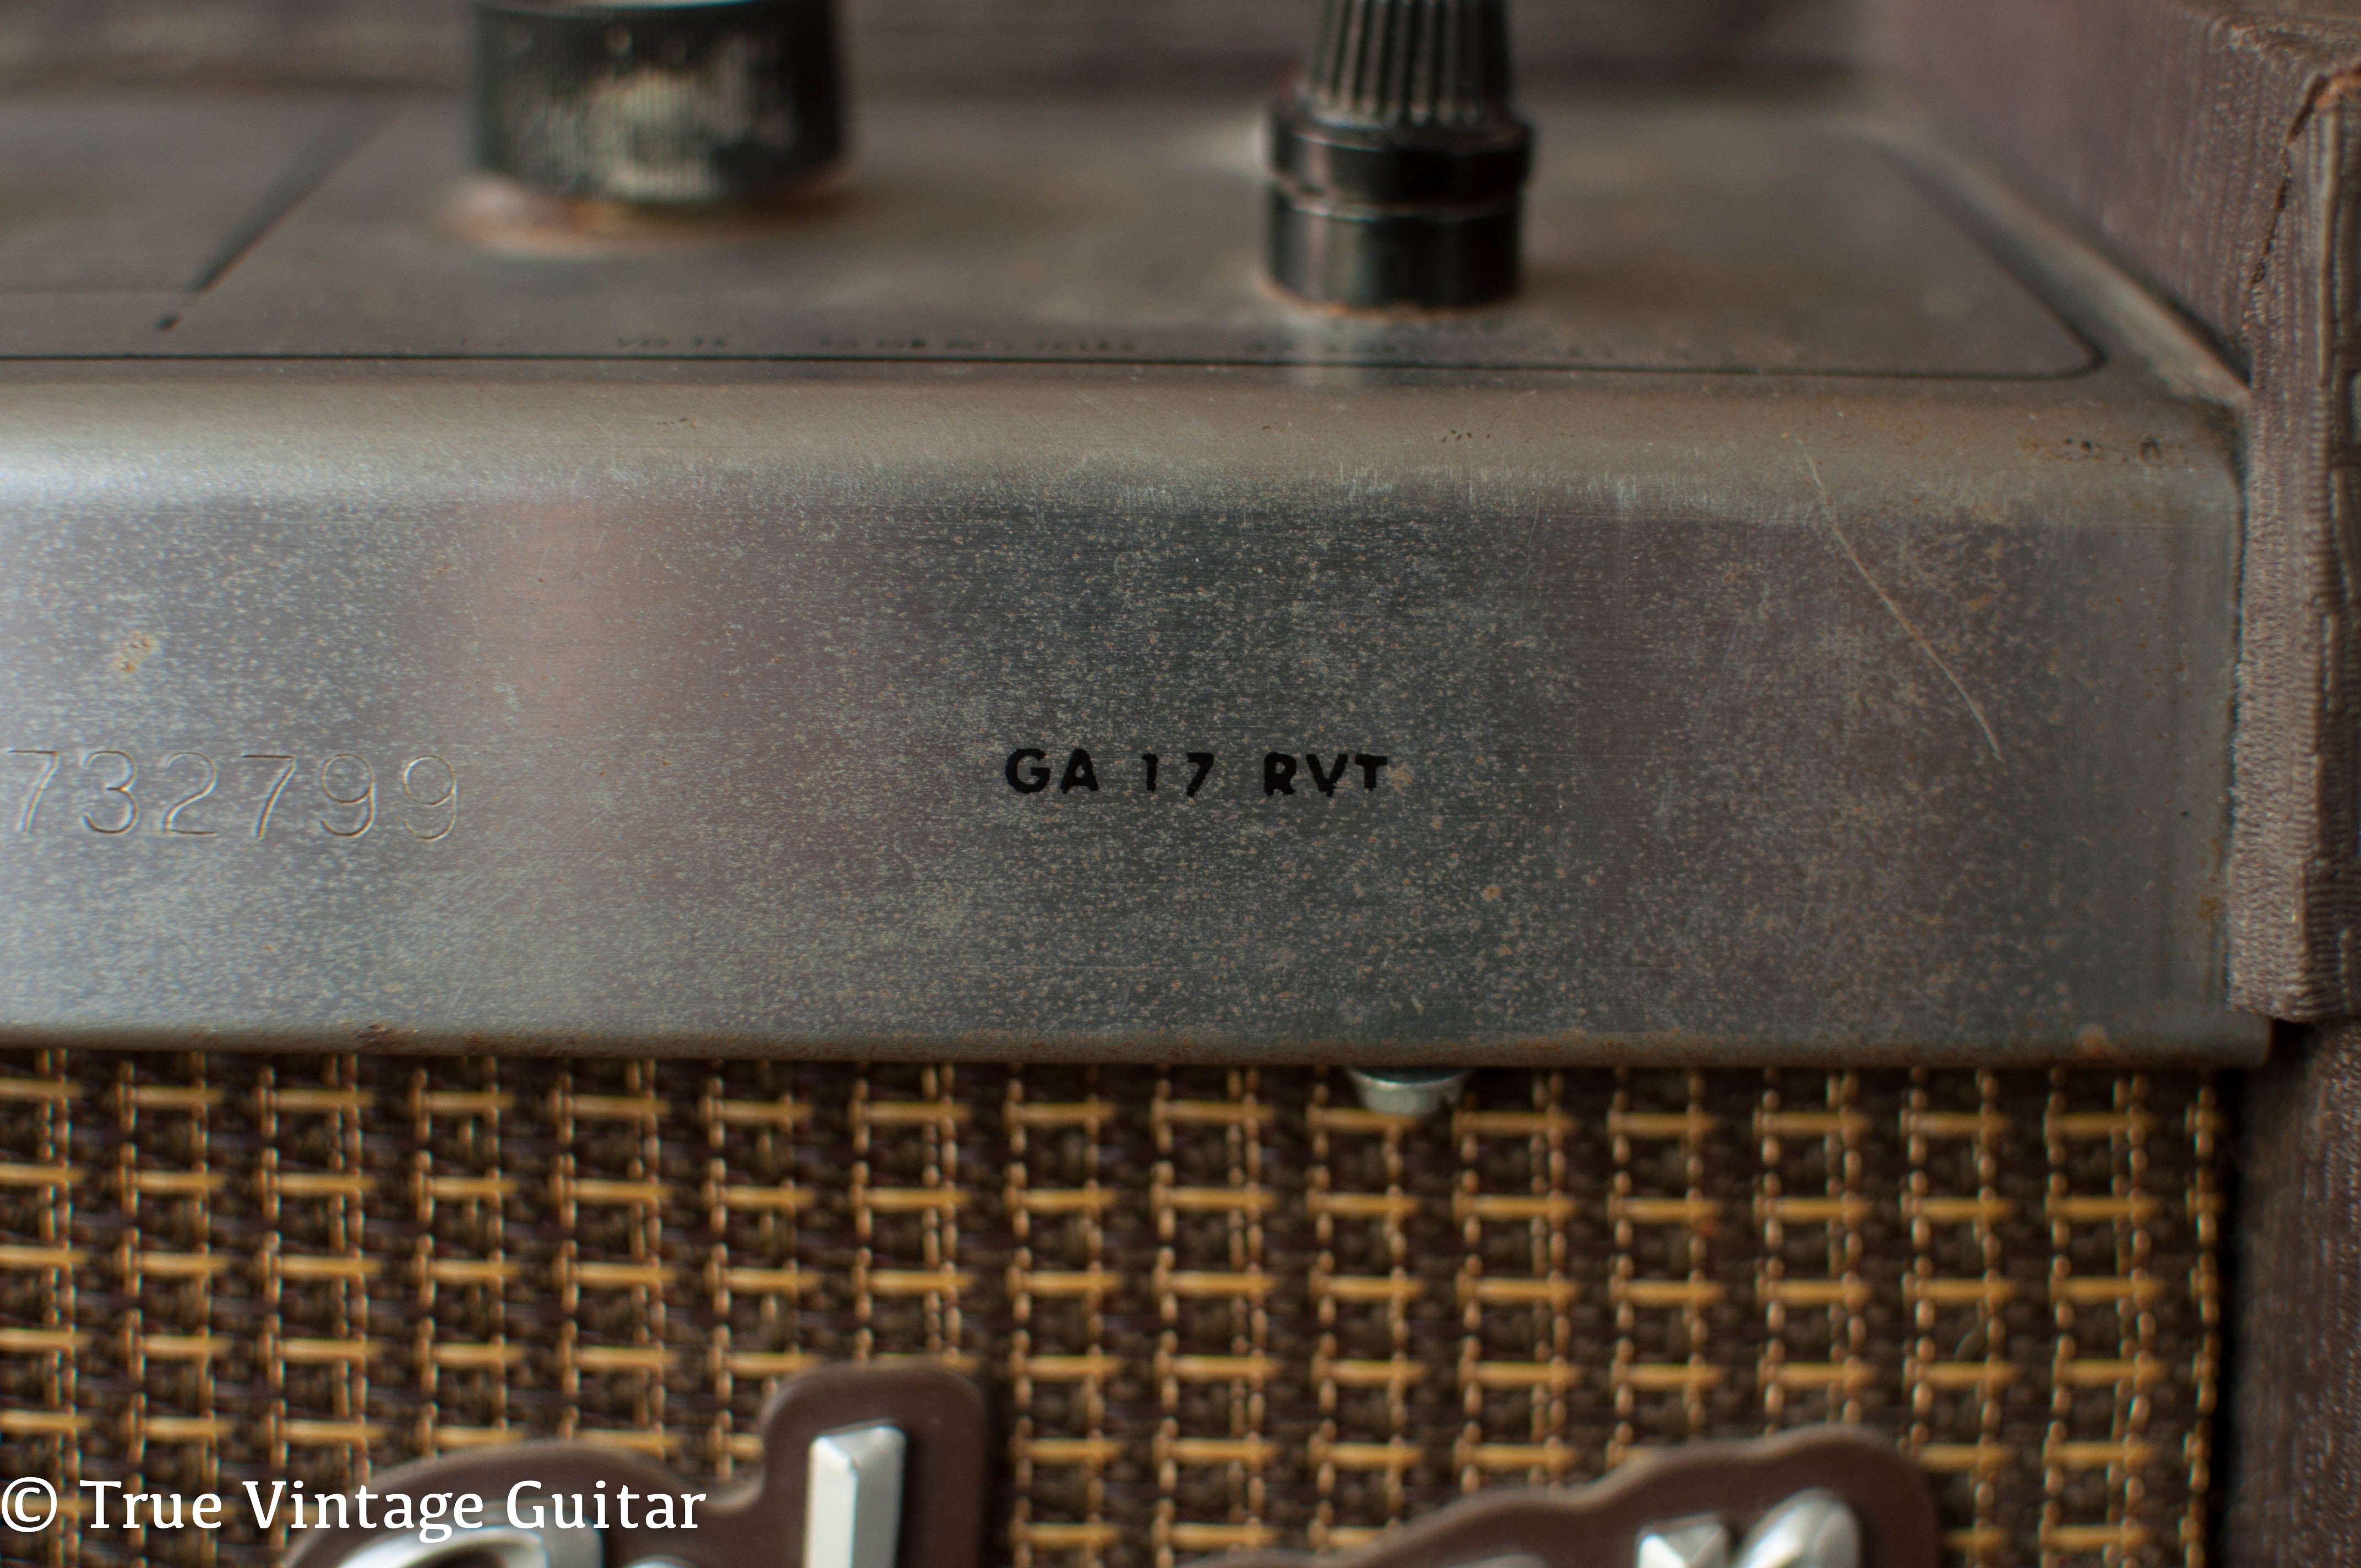 1964 Gibson GA-17 RT guitar amp